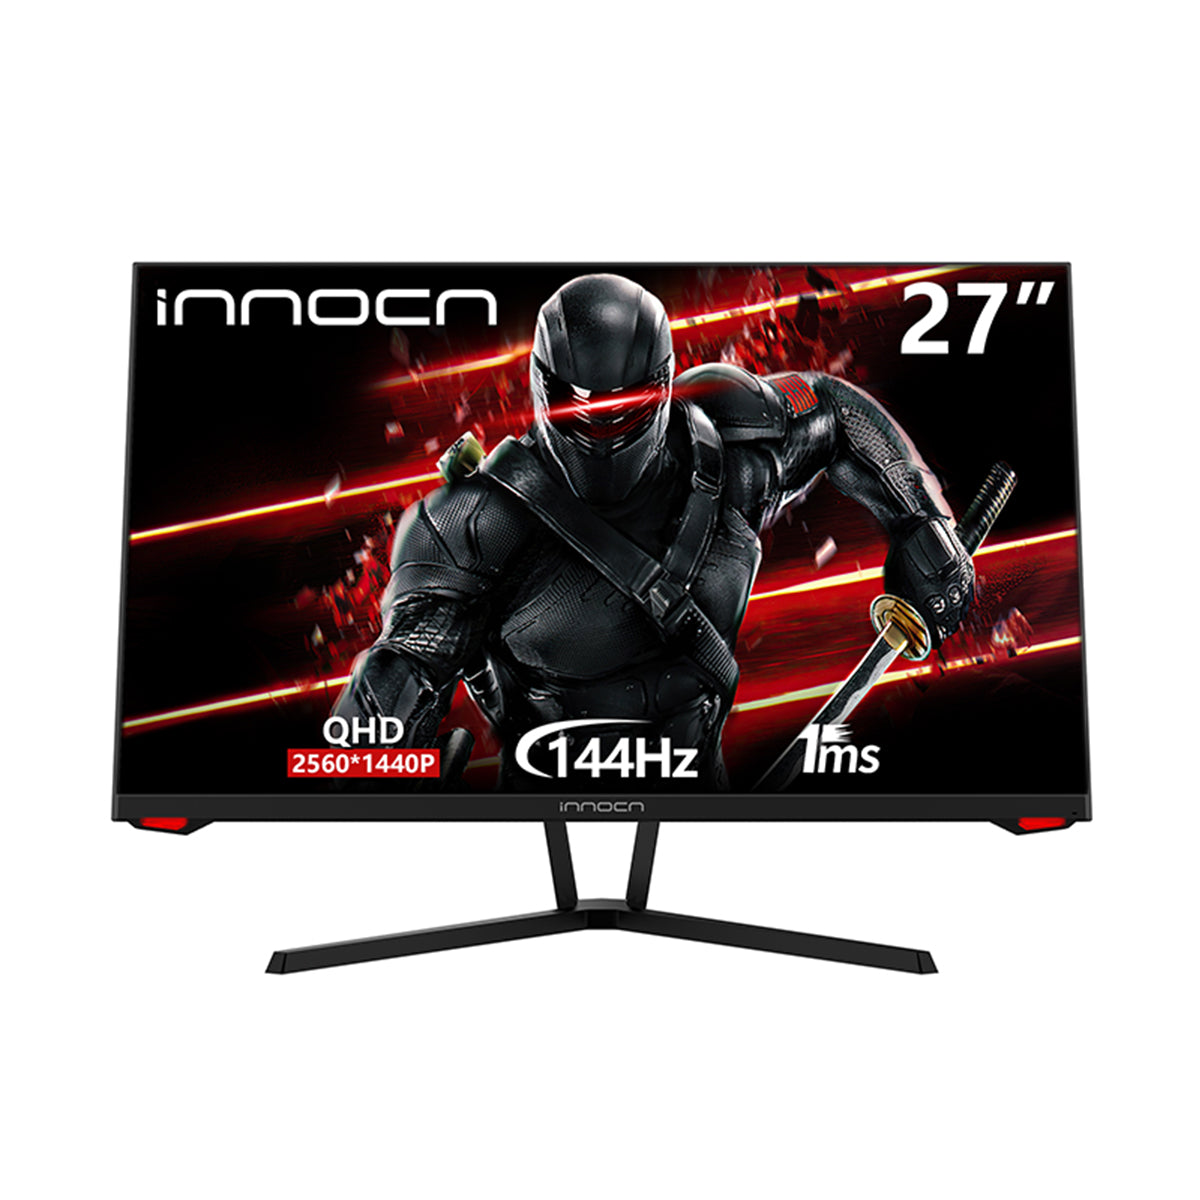  INNOCN 25G1G 24.5 Gaming Monitor 165Hz / 144Hz 1920 x